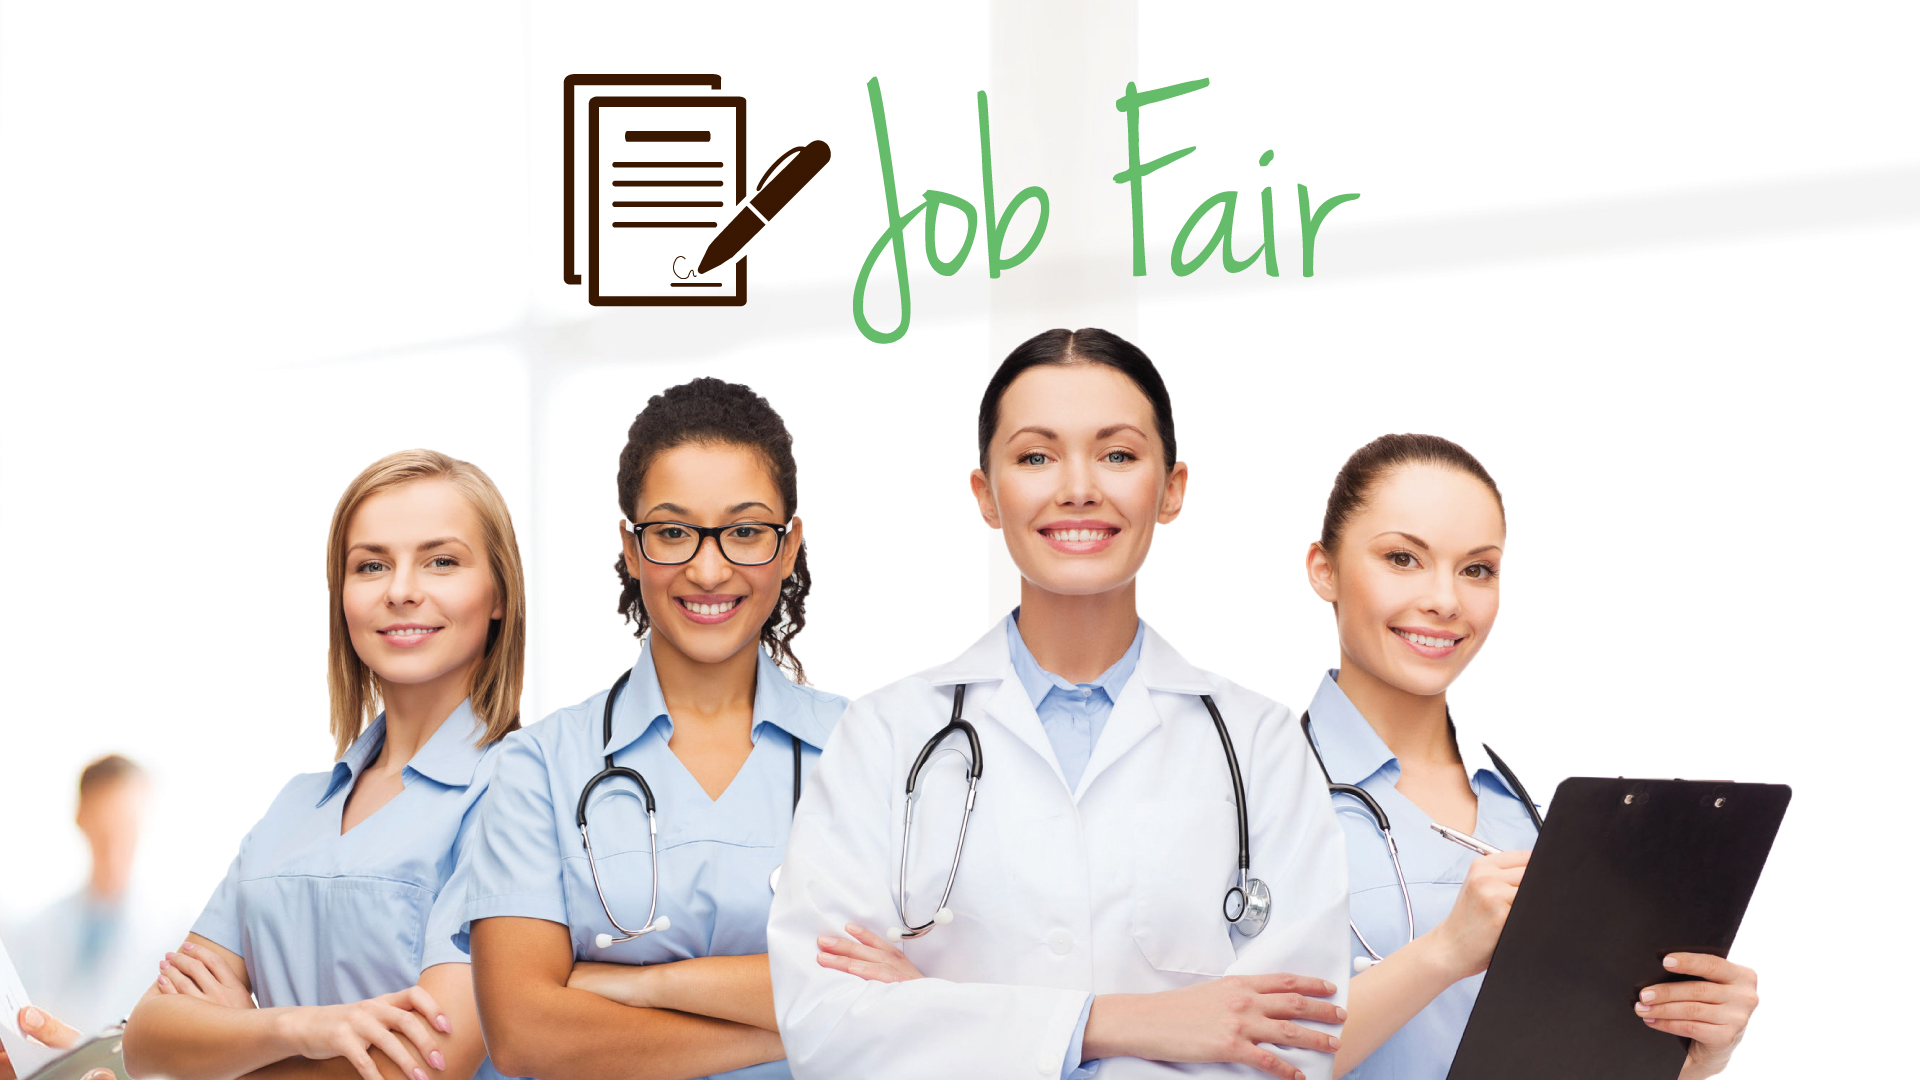 Job-Fair-FB Event Banner